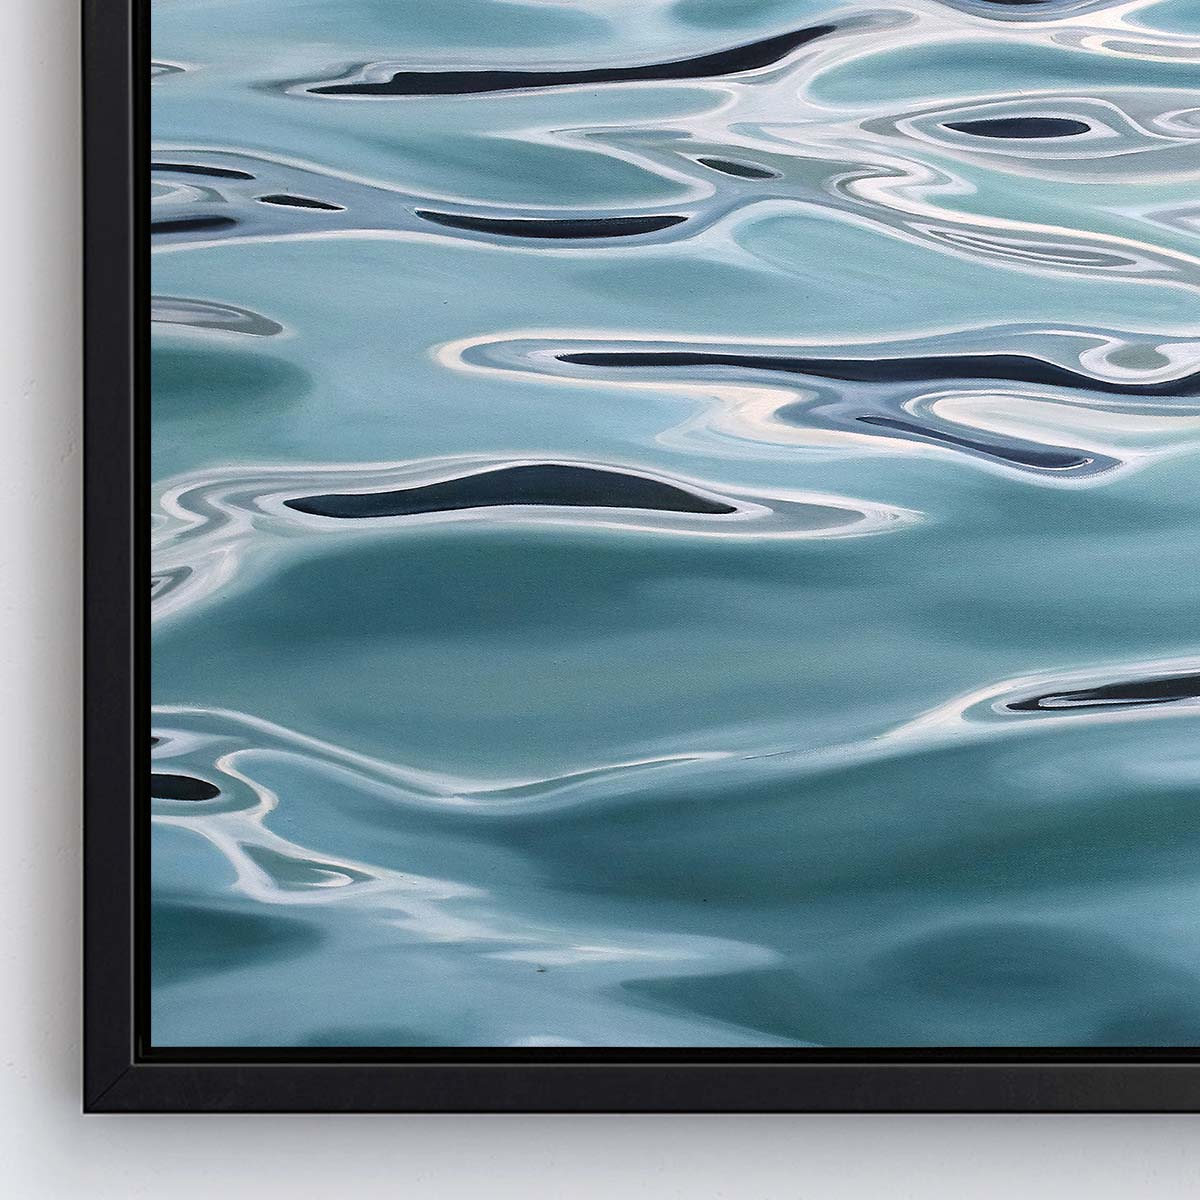 Lake Cushman Reflections - by Julie Kluh | Art Bloom Canvas Art